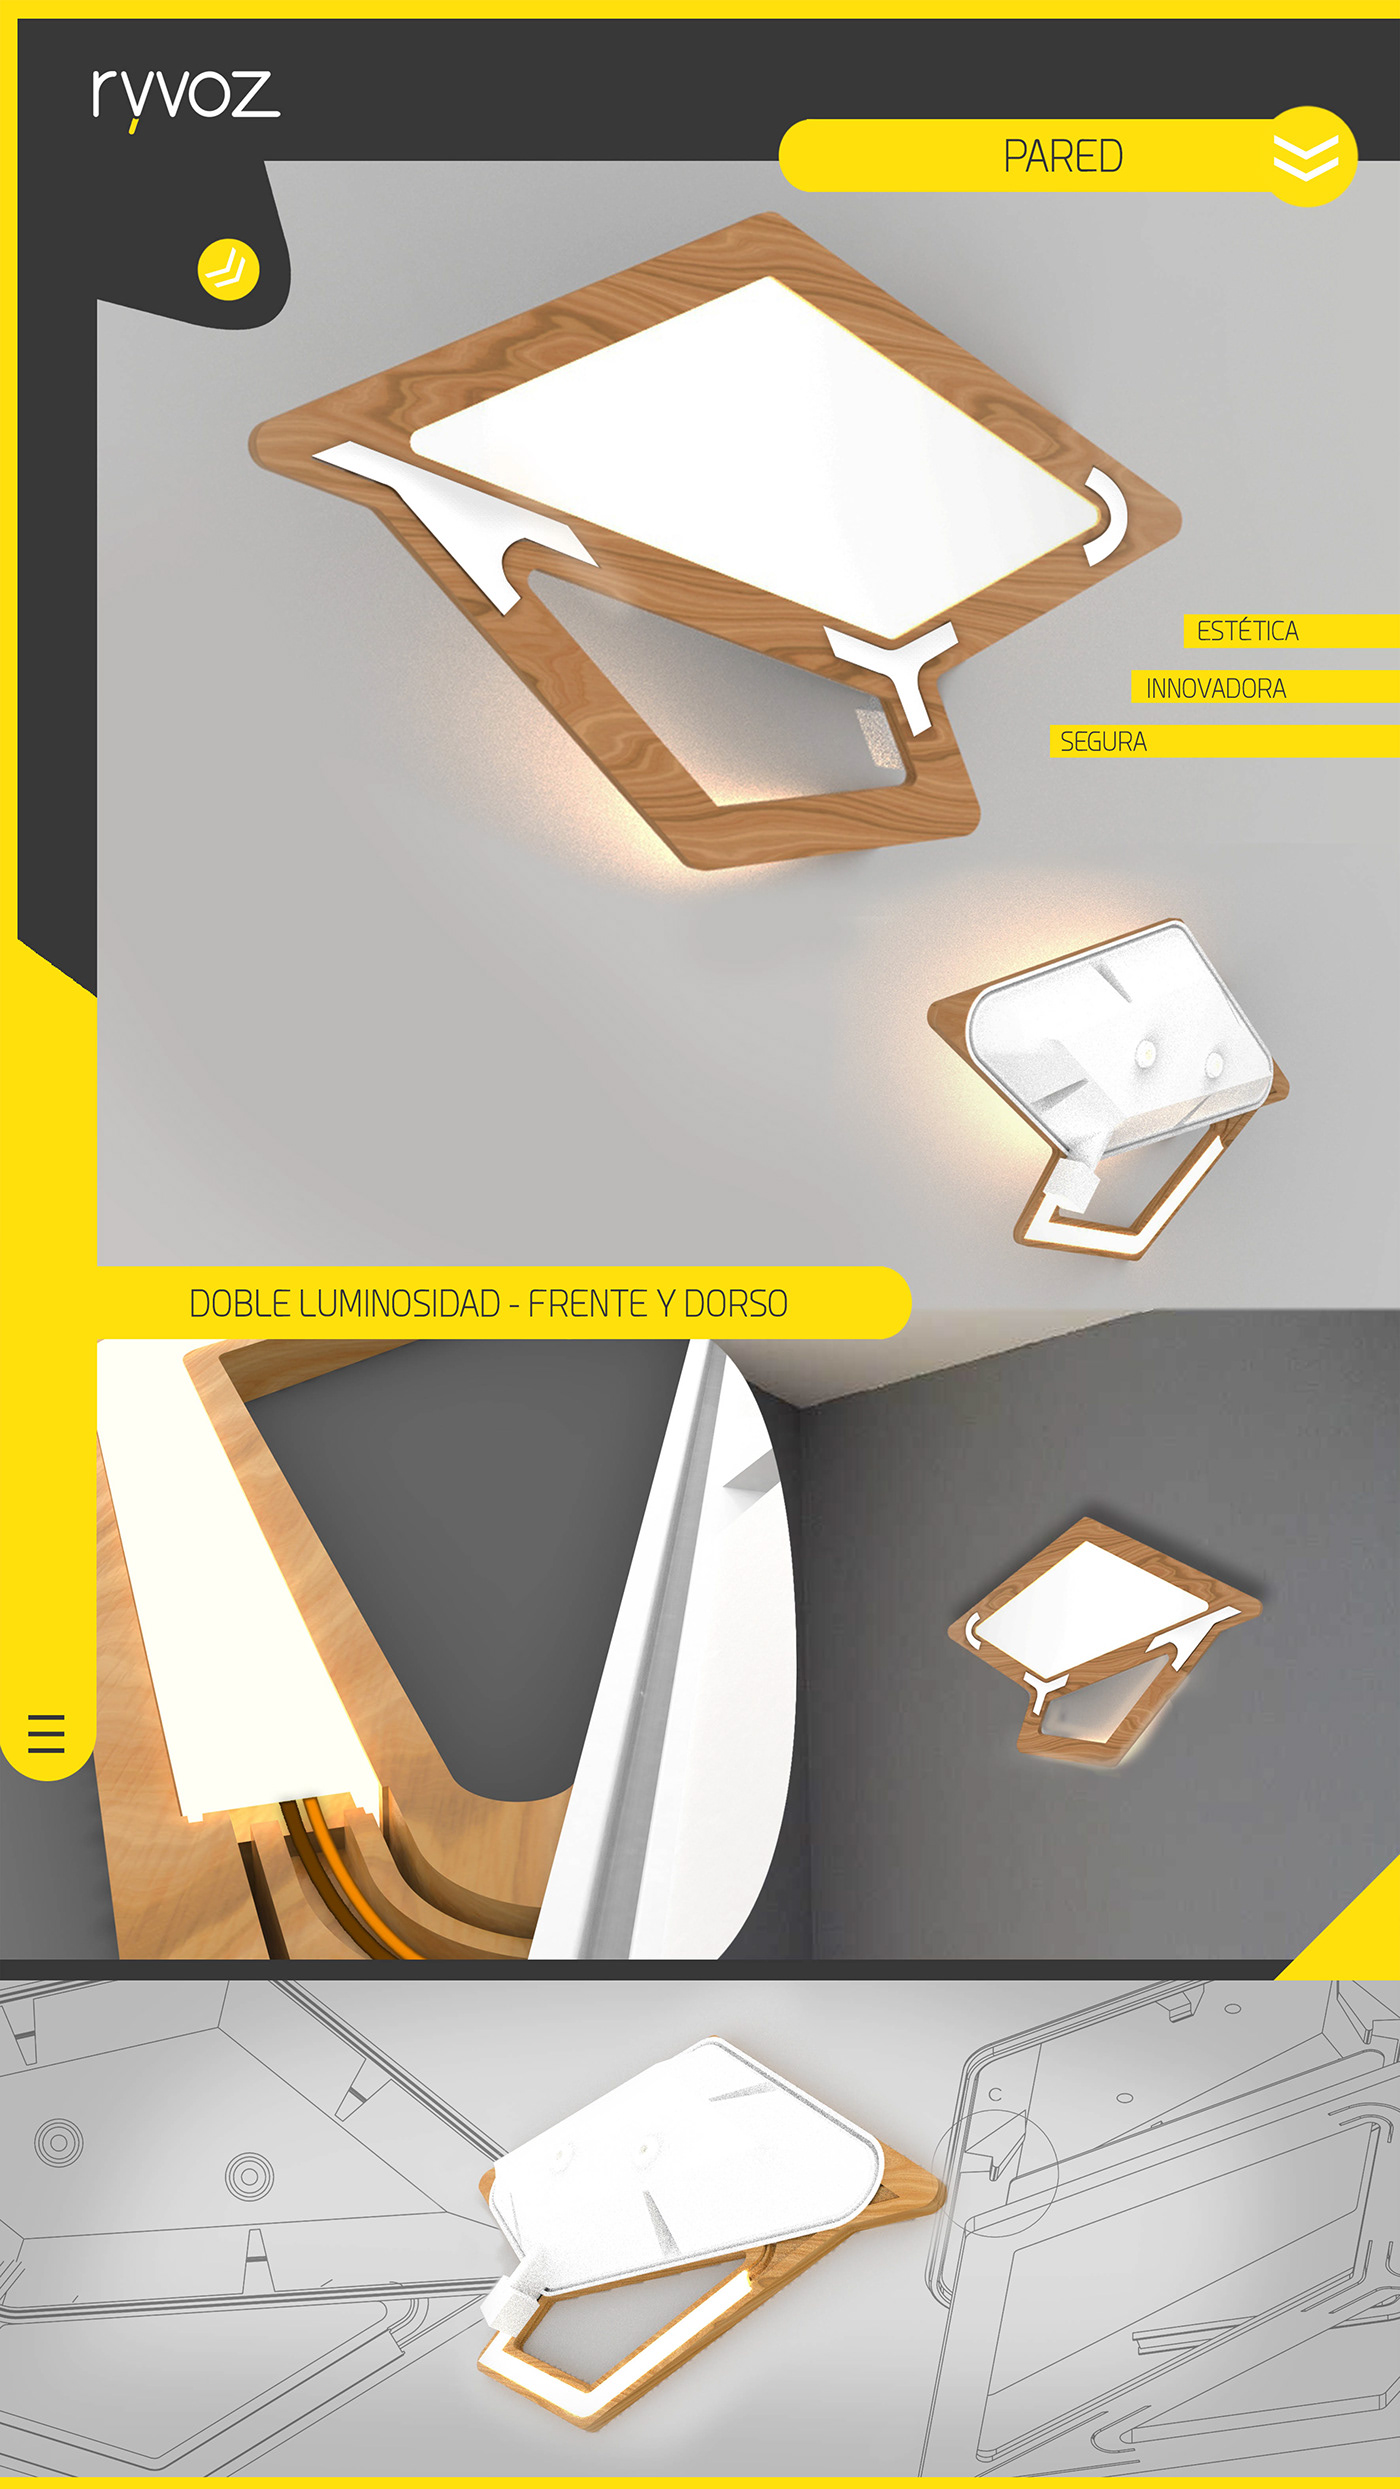 Render lighting industrial design greendesign Interior ecodesign